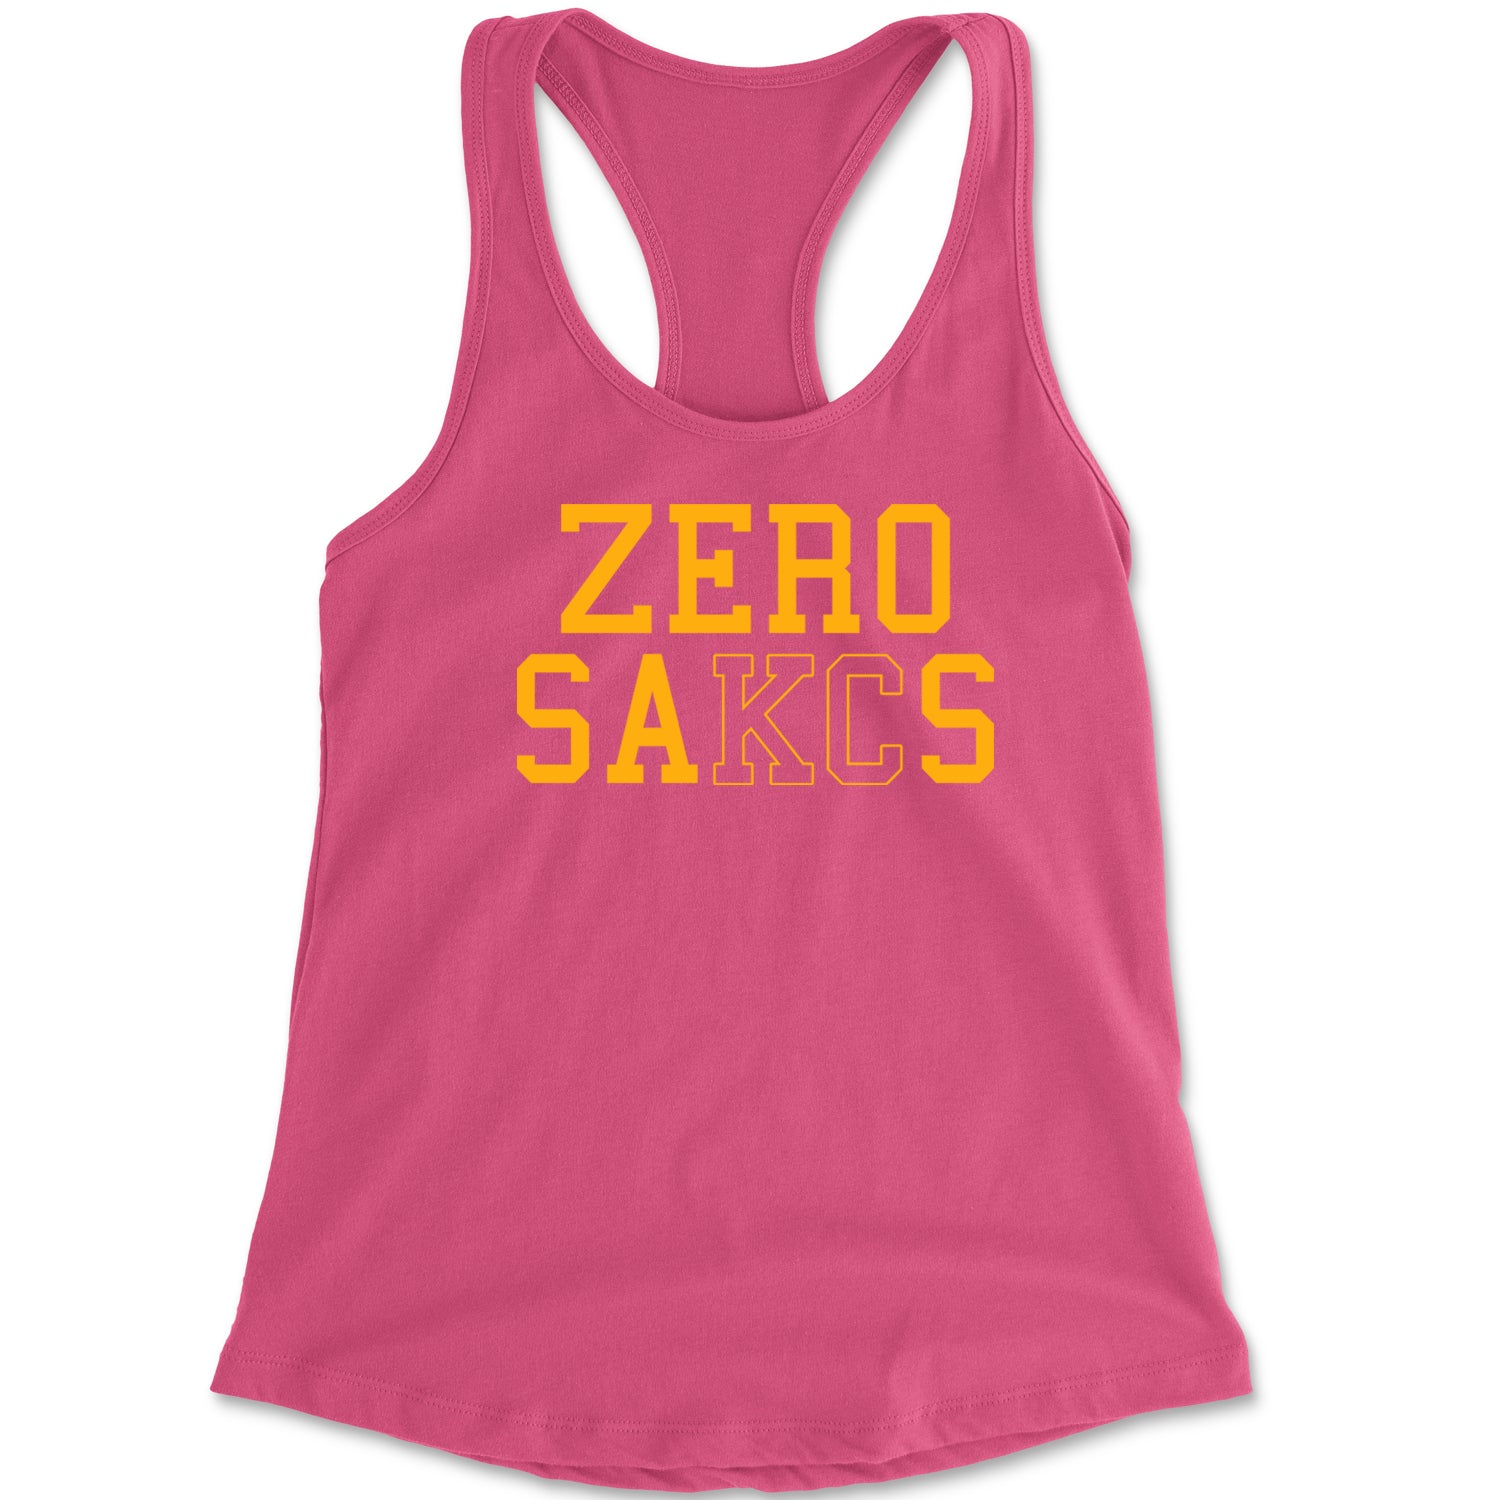 Zero Sacks Kansas City Racerback Tank Top for Women ball, brown, foot, football, kelc, orlando, patrick, sacks, sakcs by Expression Tees